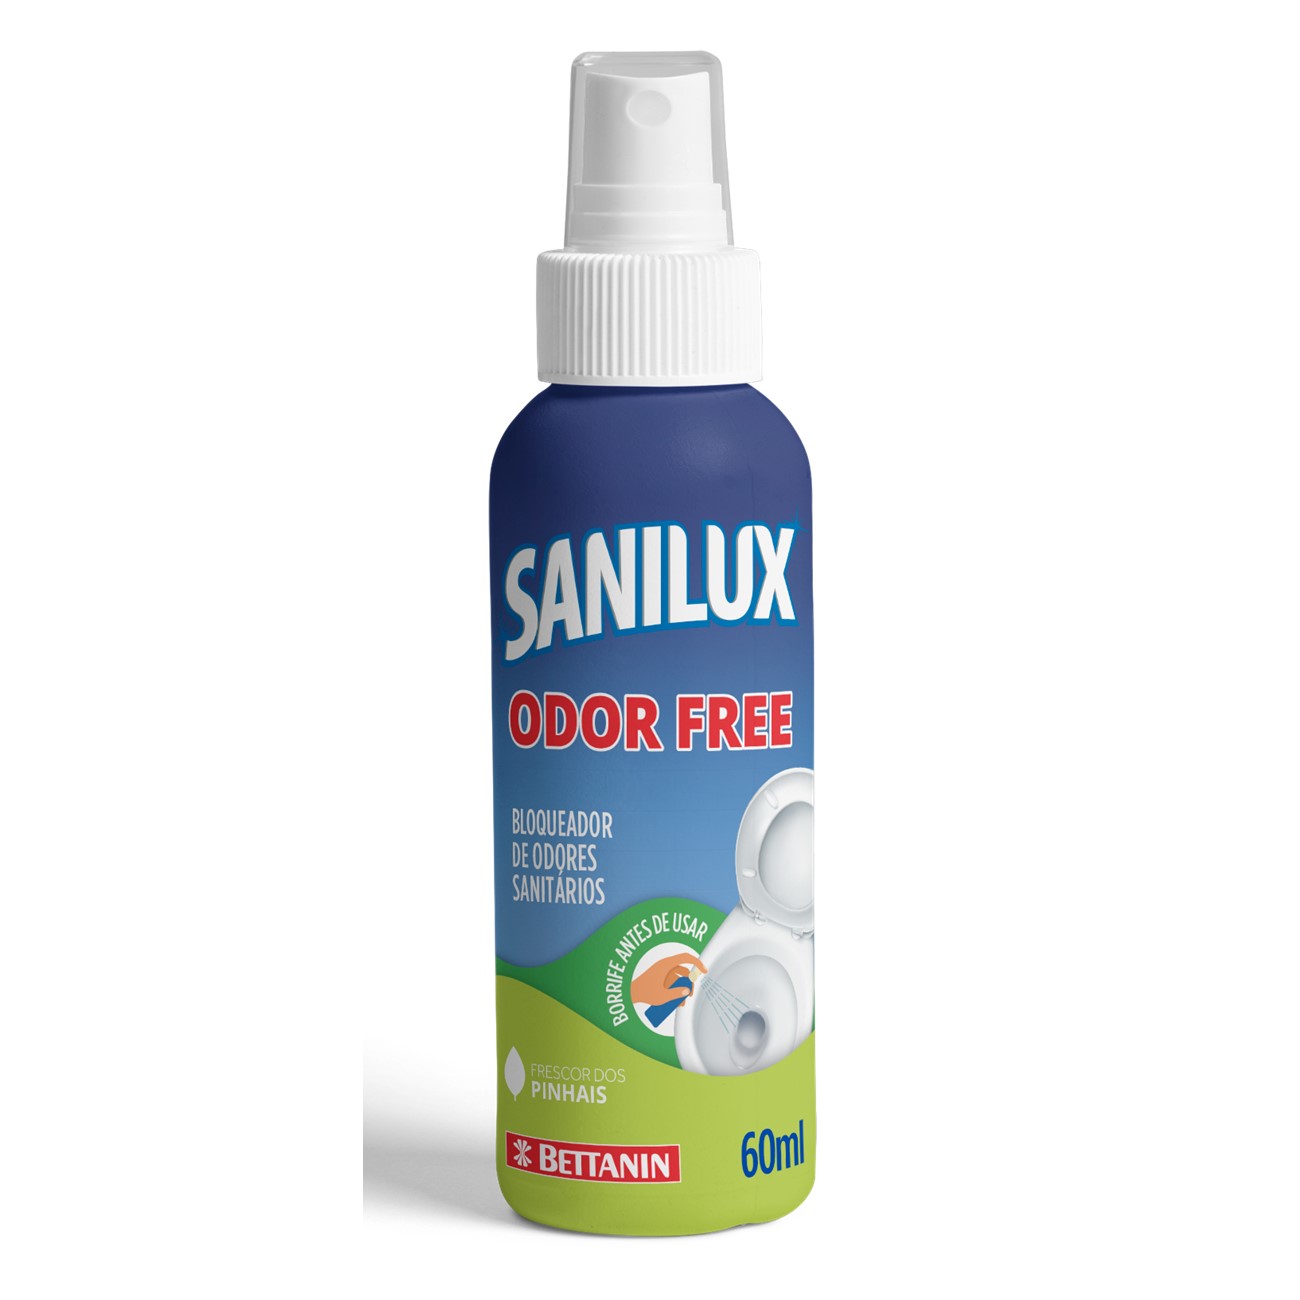 Sanilux Odor Free